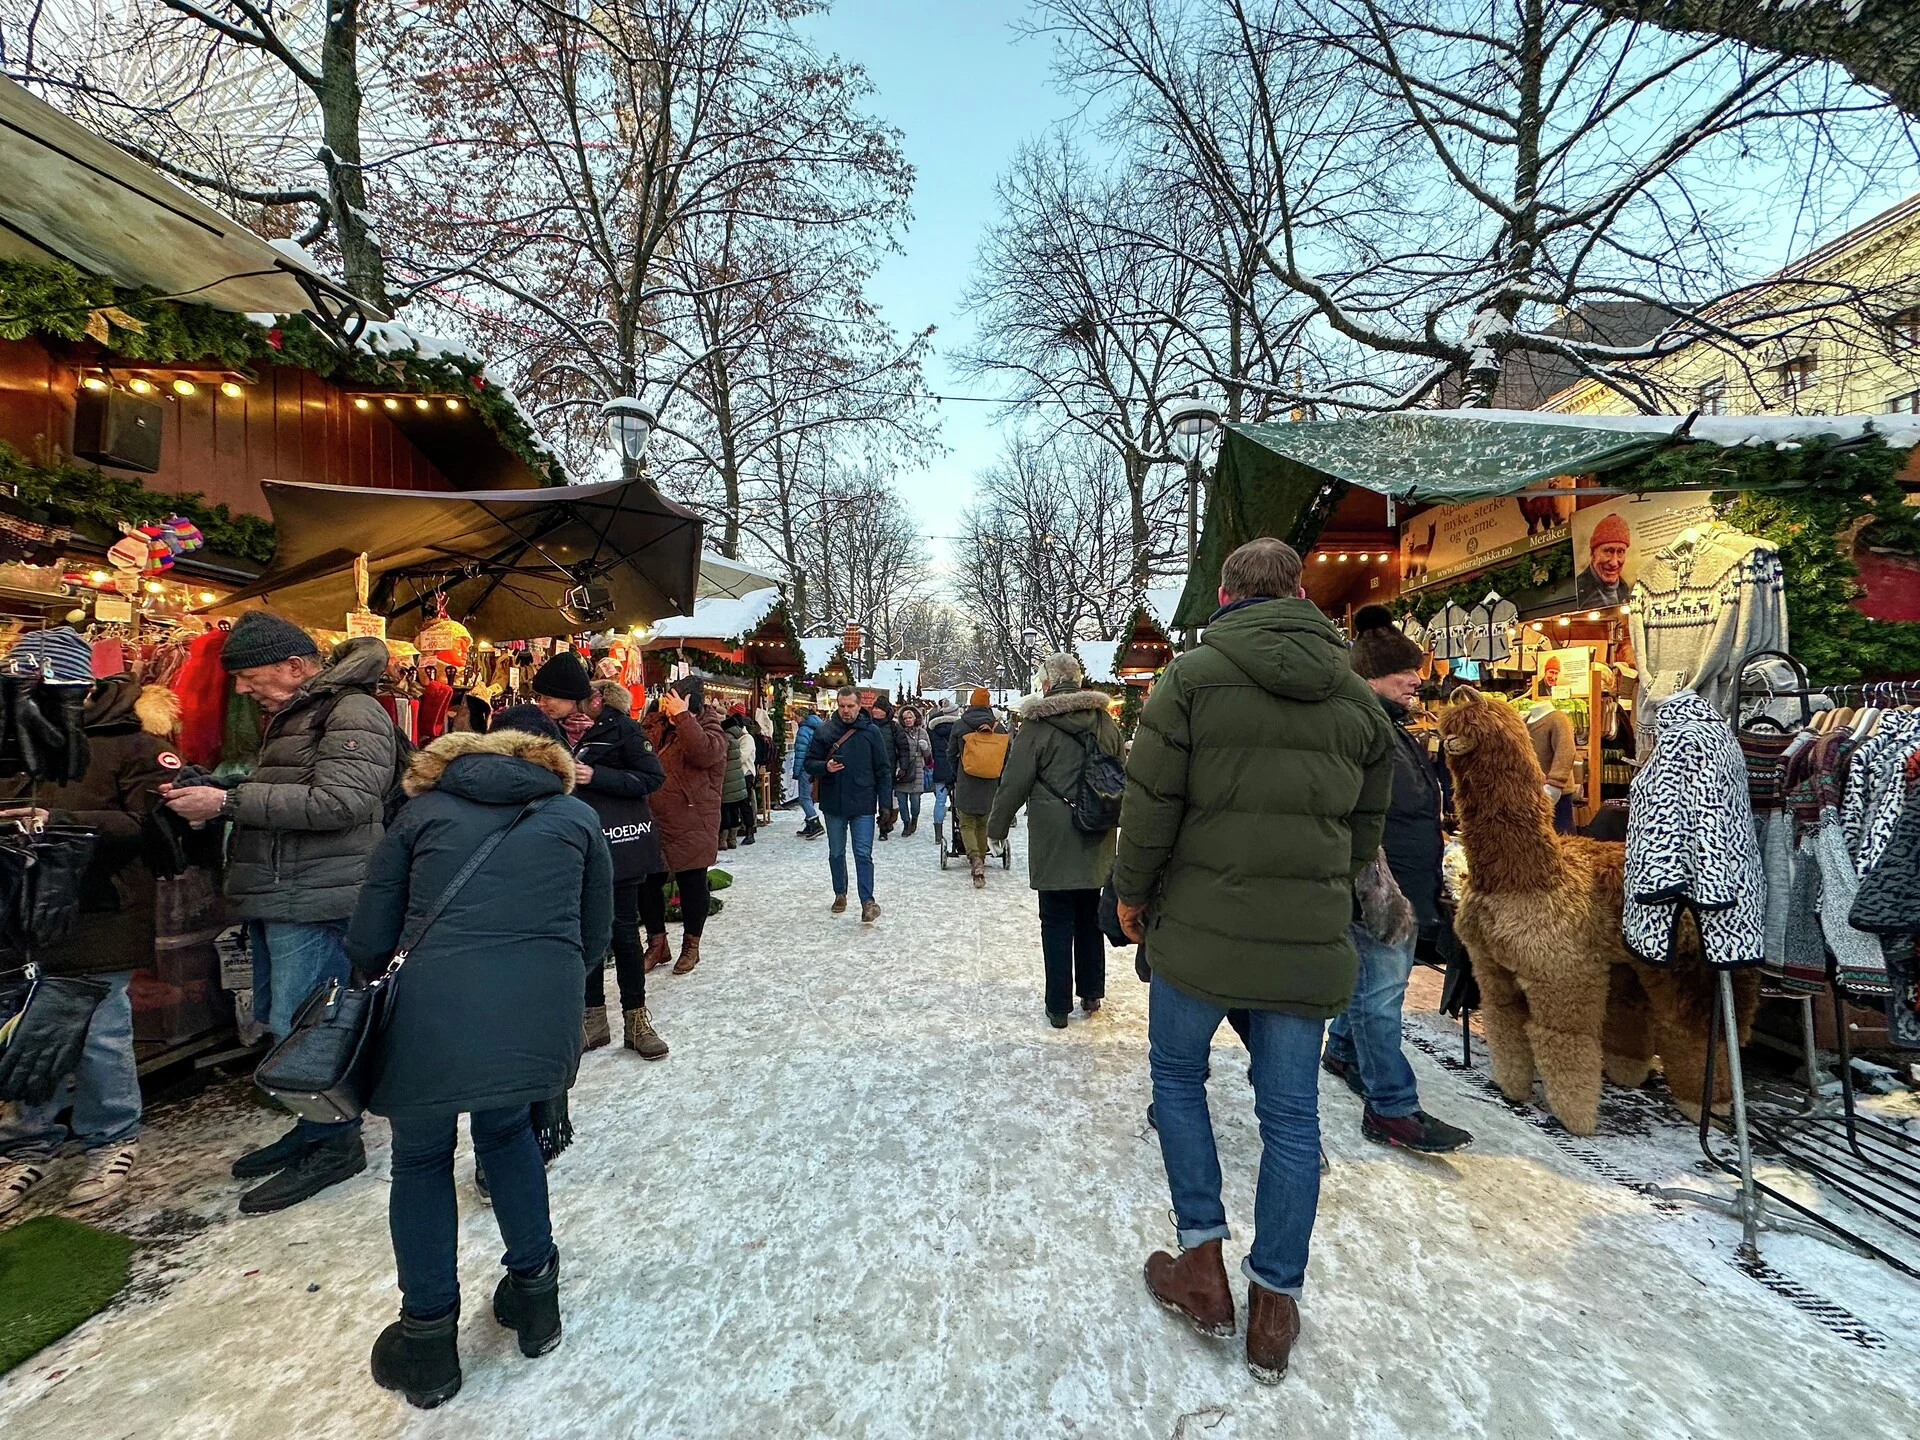 Oslo Christmas Market. PHOTO: VISITOSLO/FARA MOHRI
